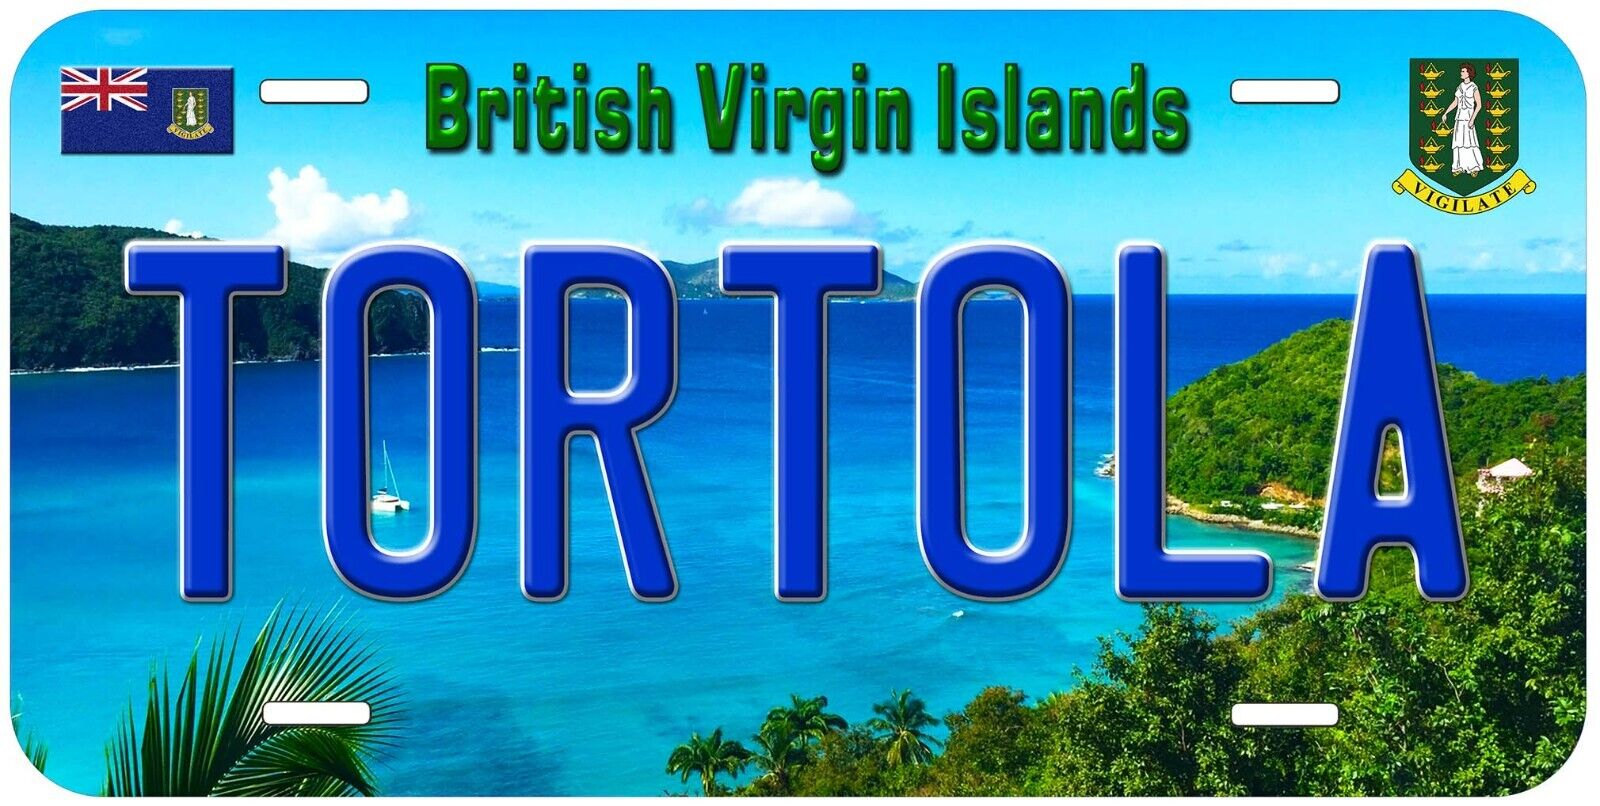 Tortola British Virgin Islands Novelty Car License Plate